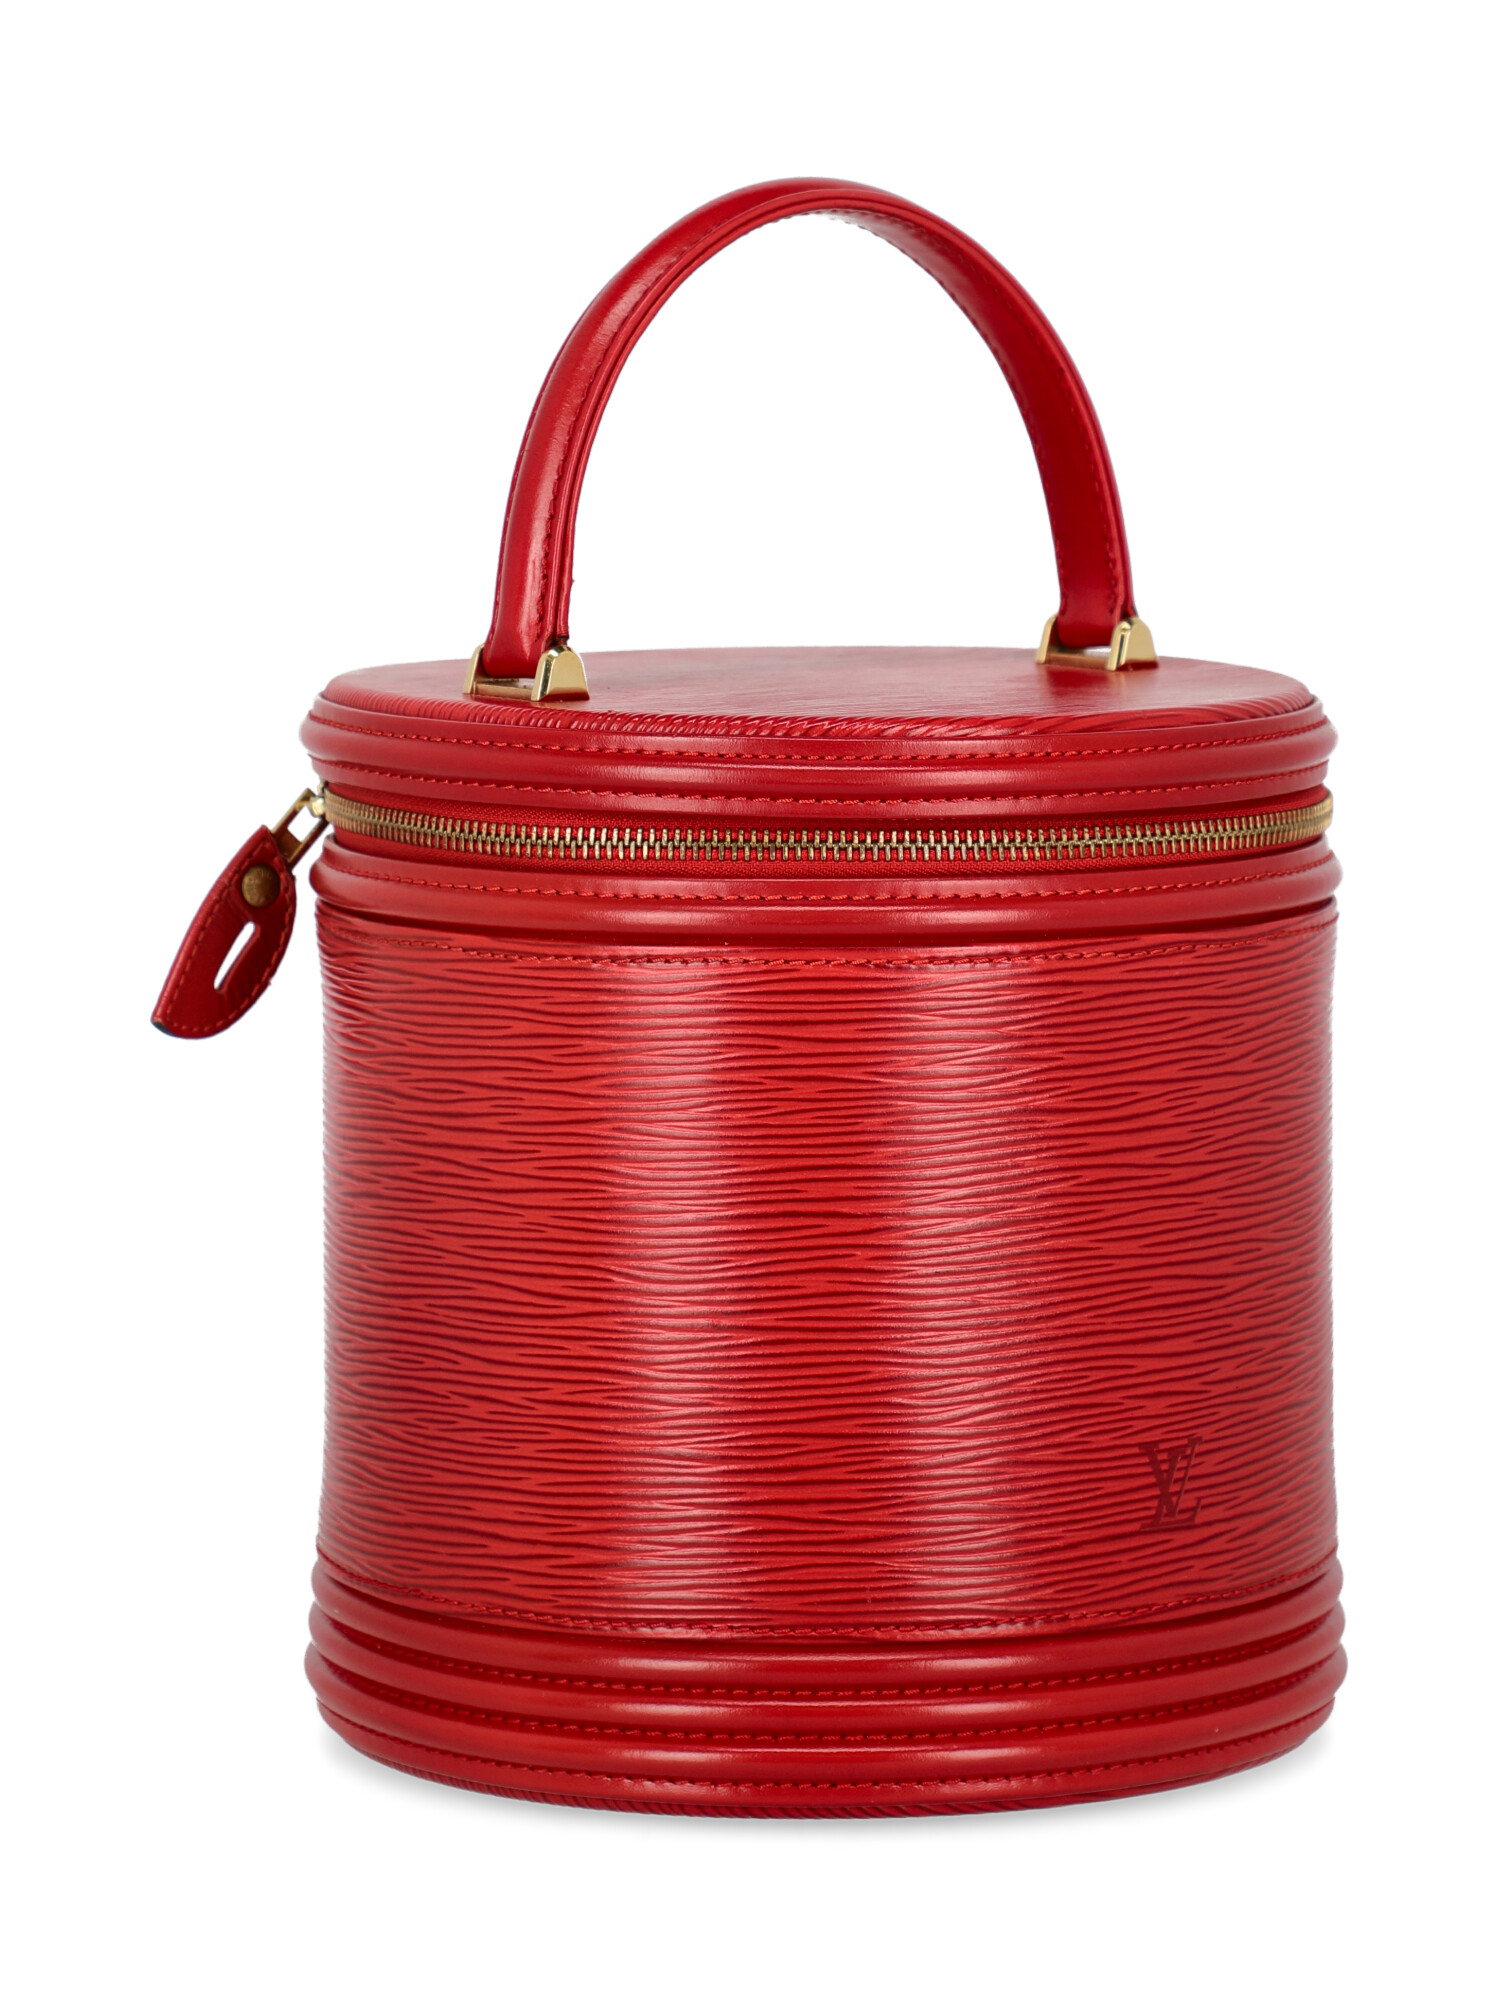 Louis Vuitton Special Price Women Handbags Red | eBay